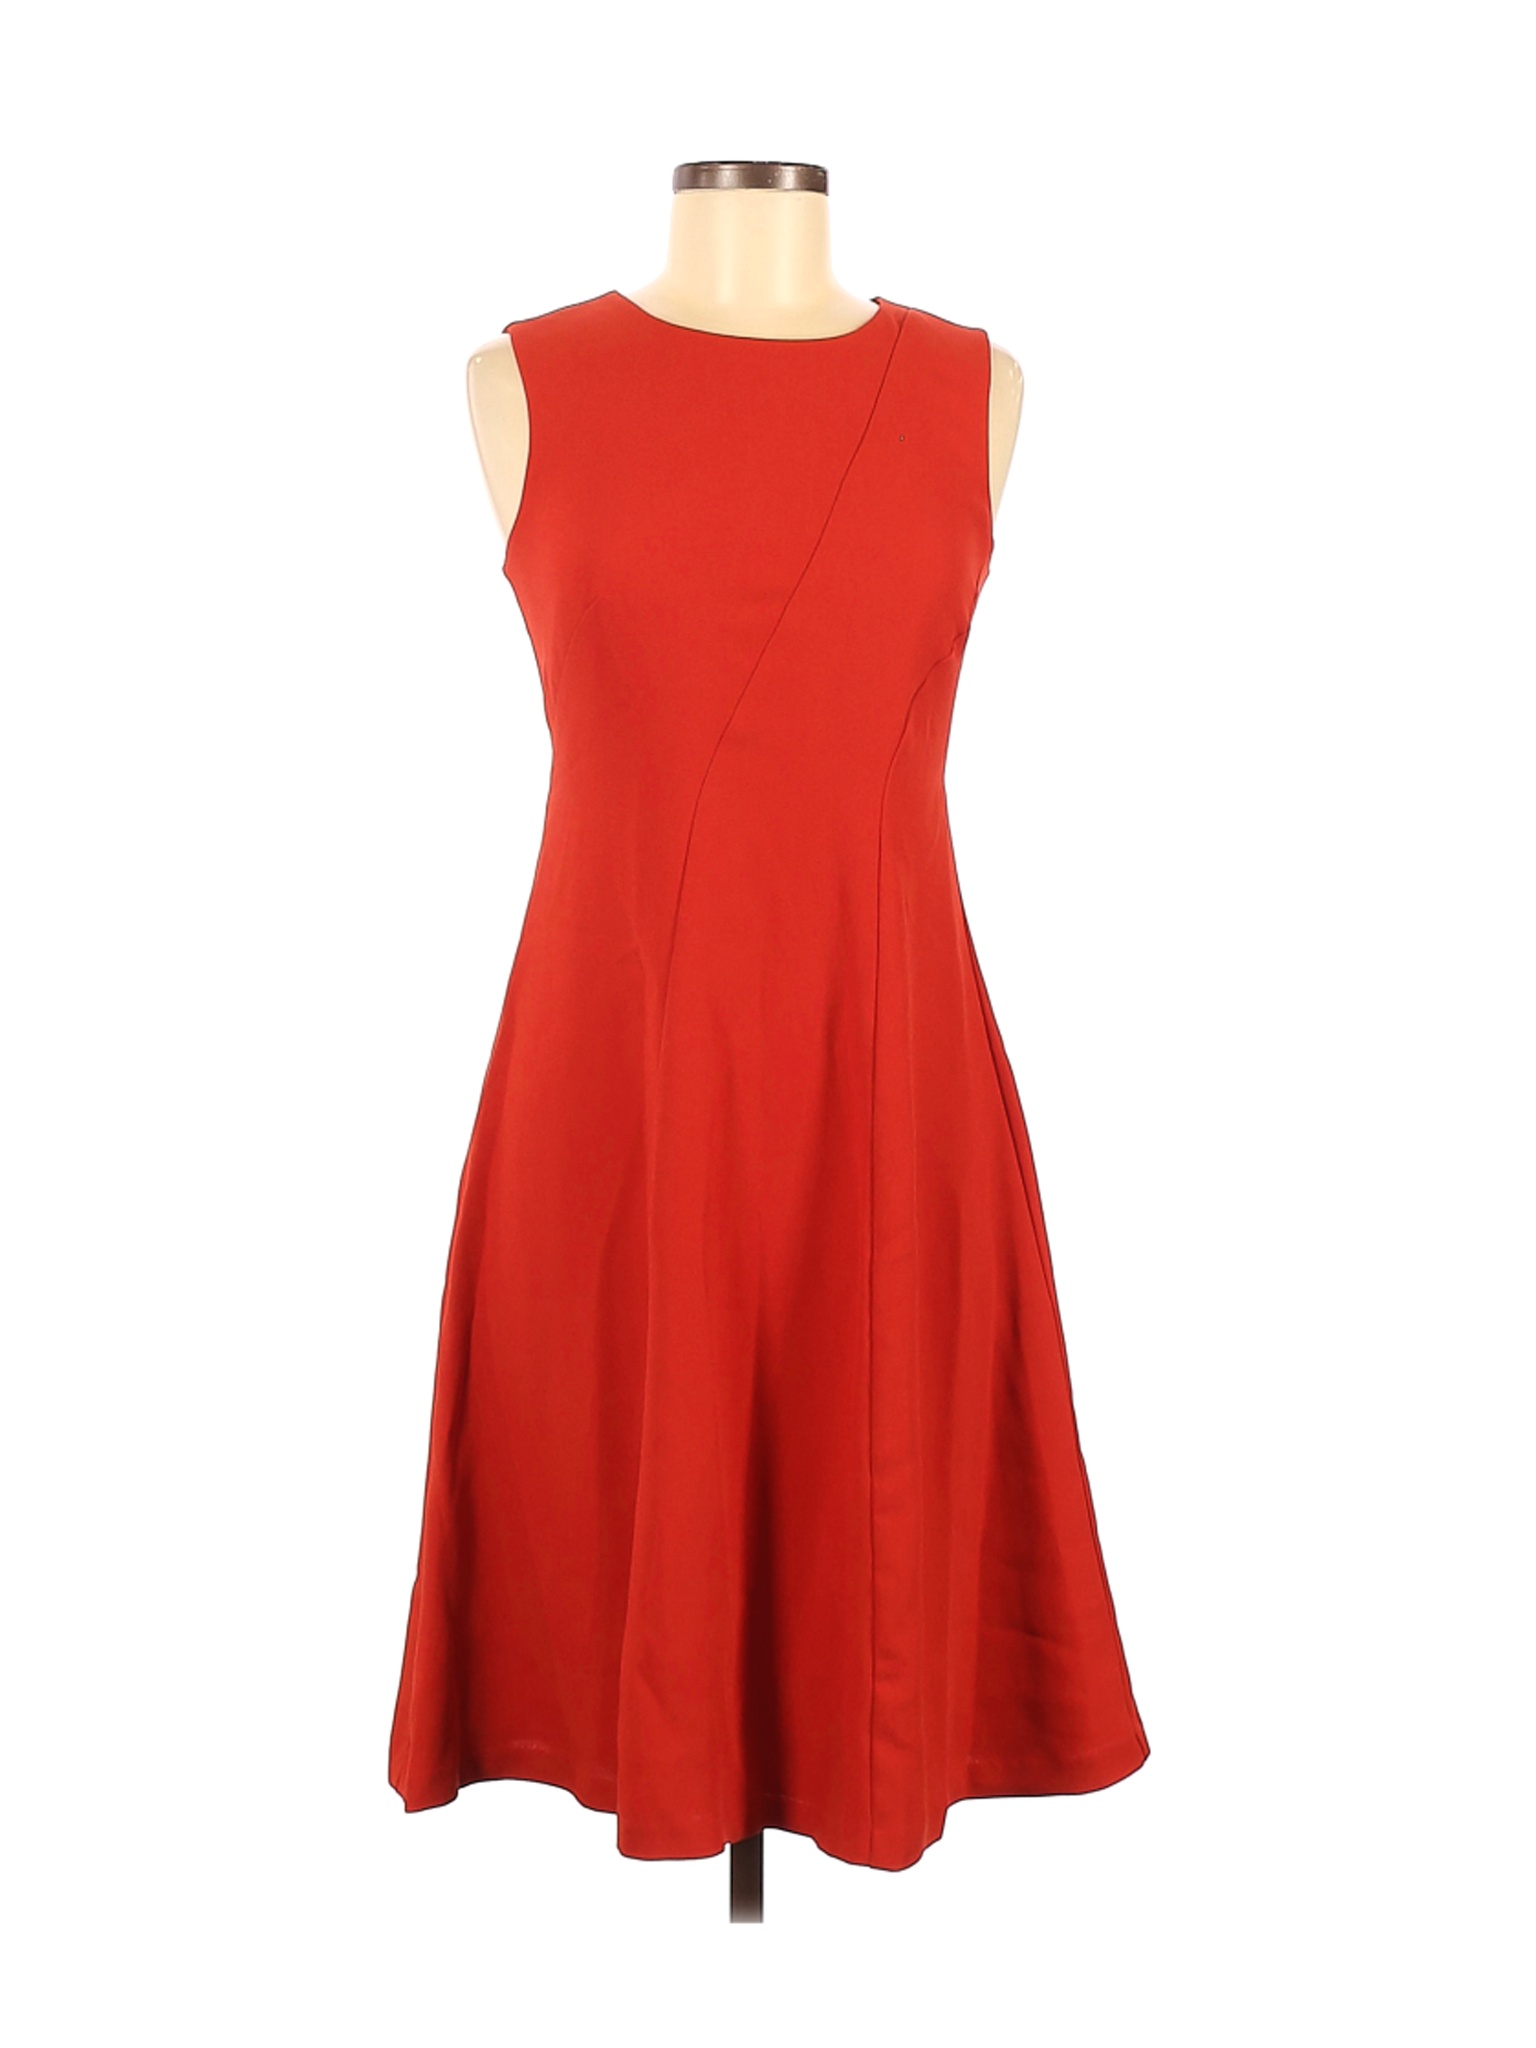 Ann Taylor Women Orange Casual Dress 2 | eBay